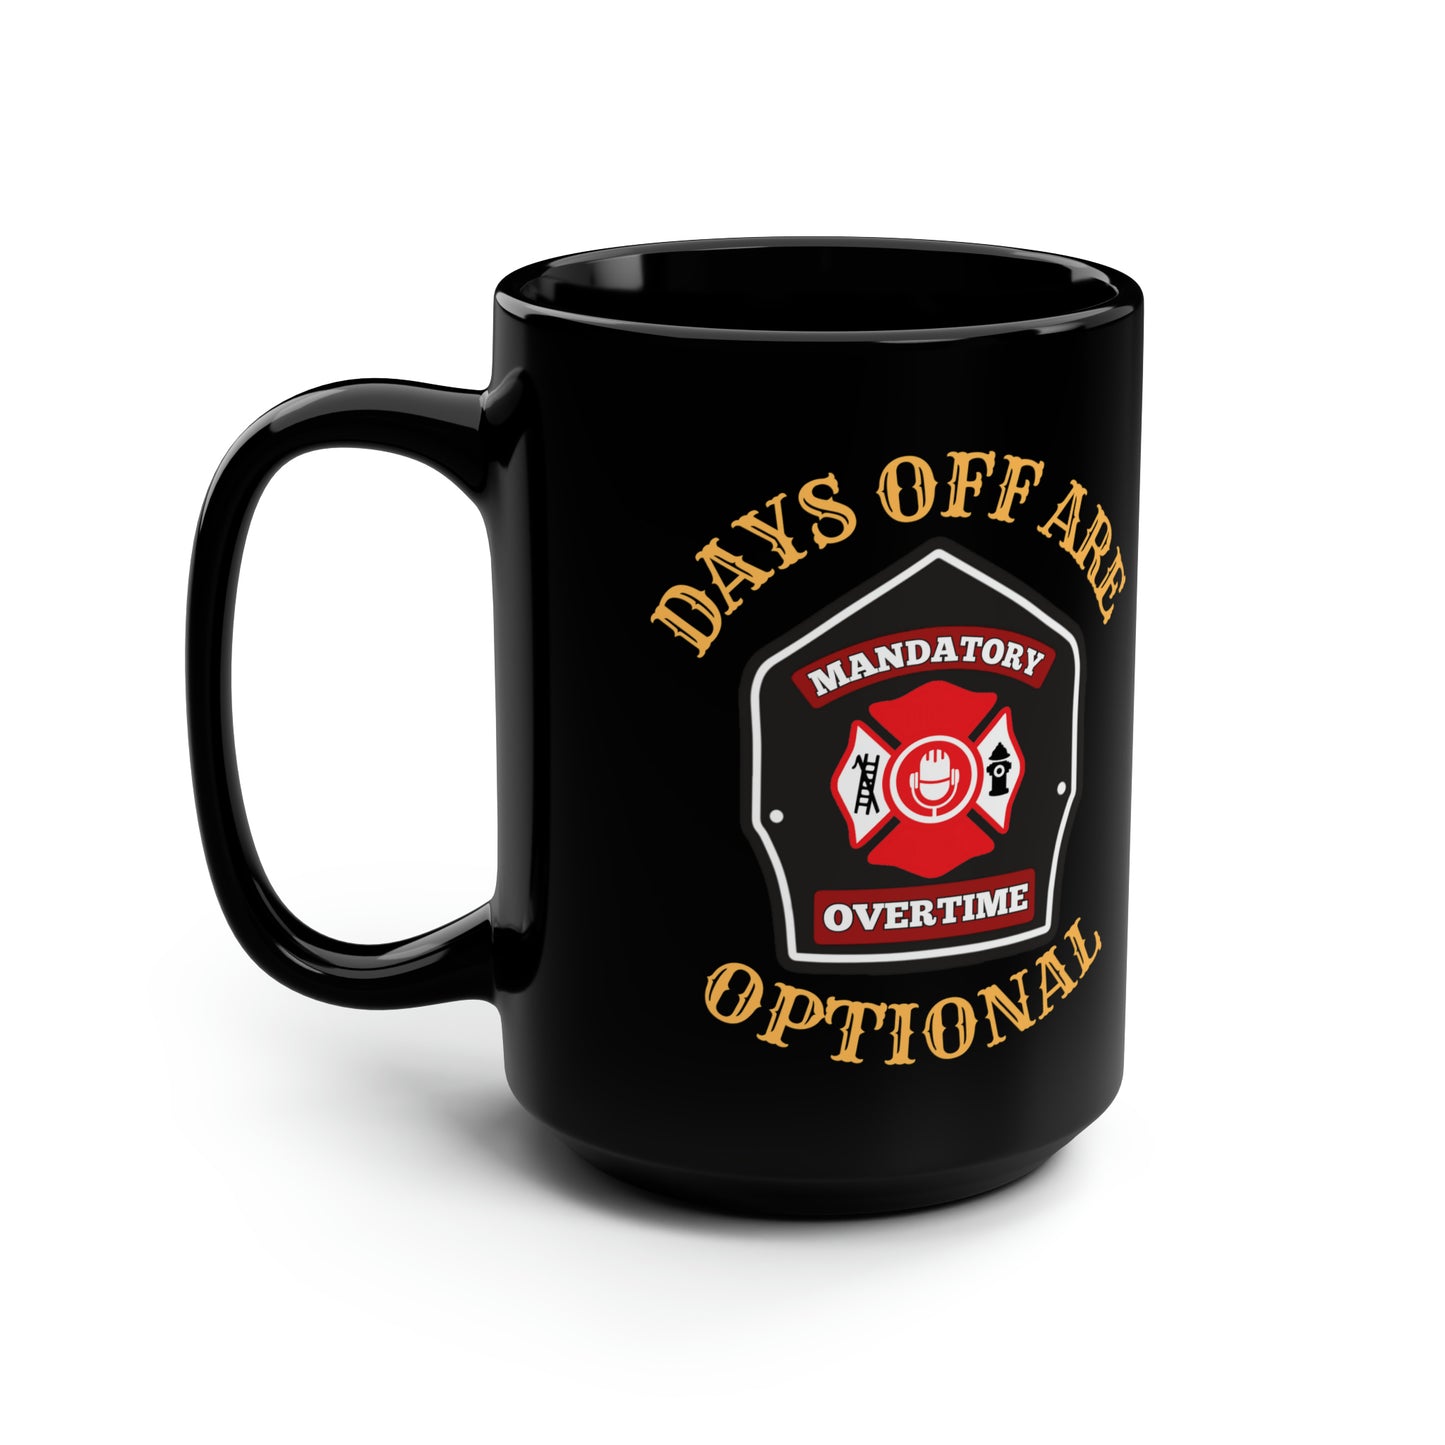 Days Off Are Optional Mug (15oz)